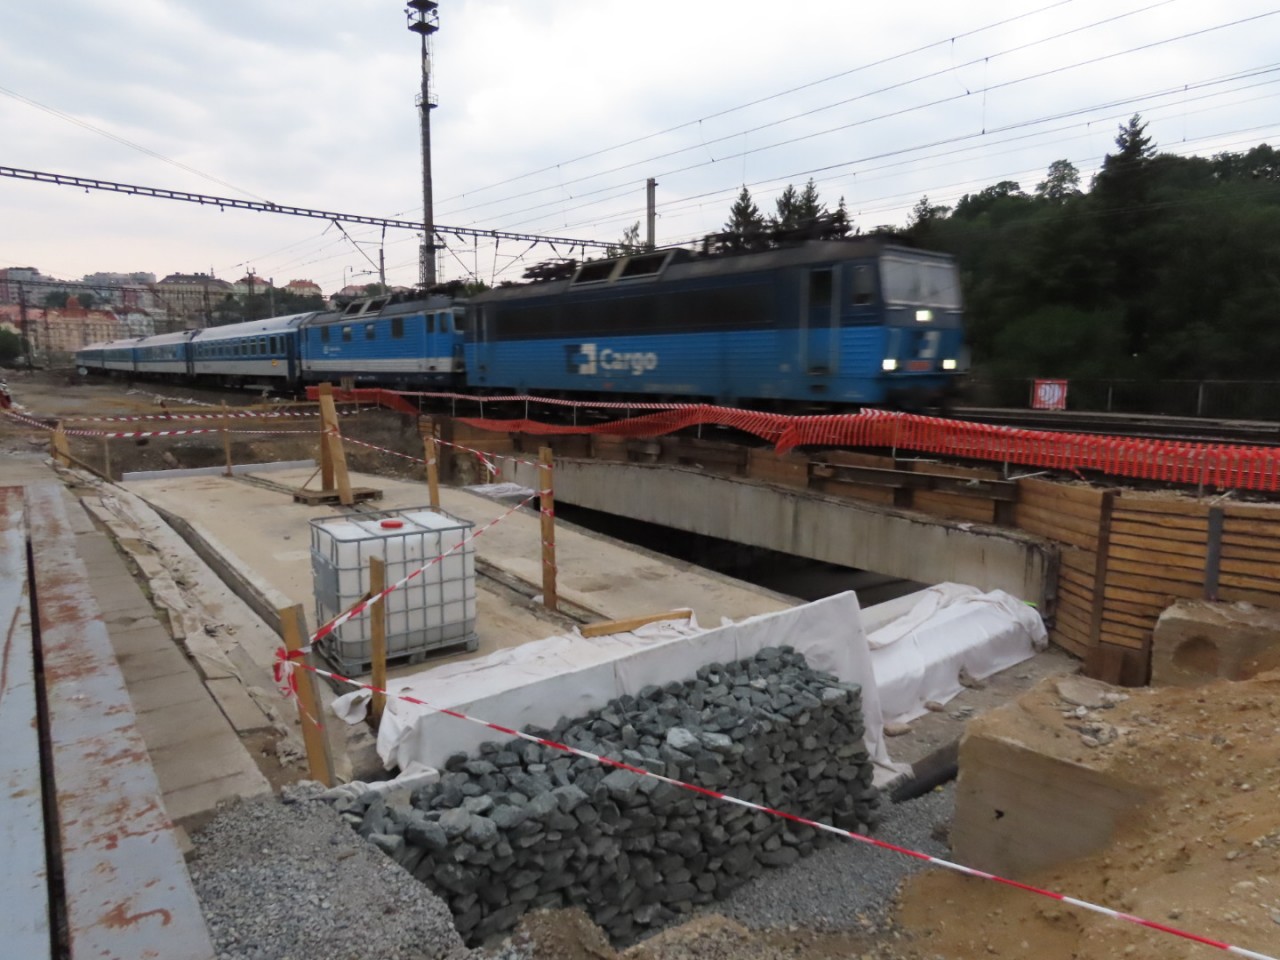 Most mal Otakarova a Cargonaut v ele vlaku D 1.7.2019